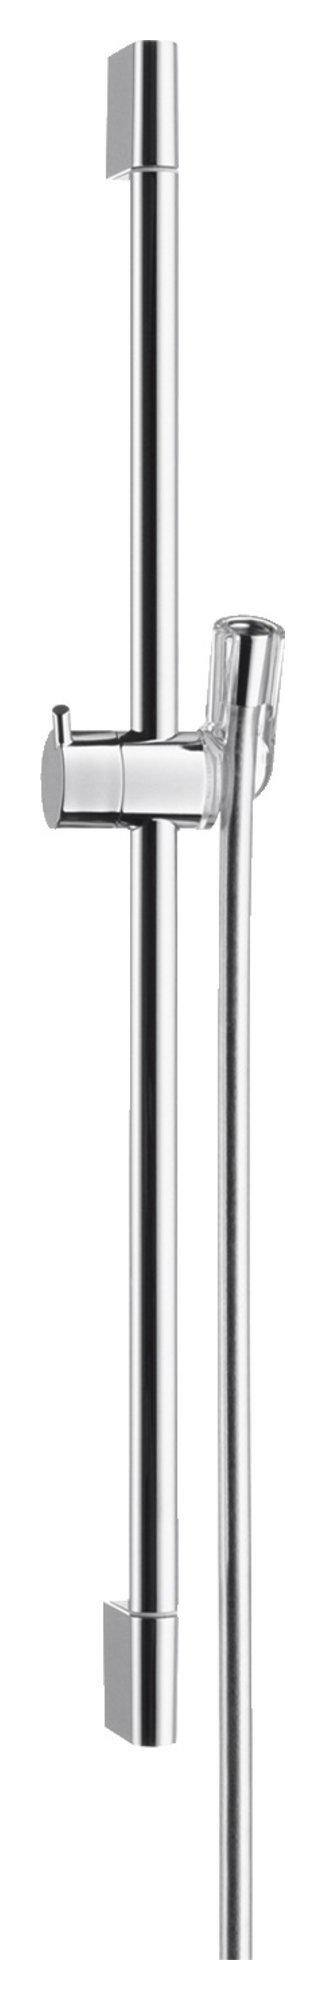 Unica barra de ducha C 65 cm con manguera de ducha, 27611000, cromada - 27611000 - Hansgrohe